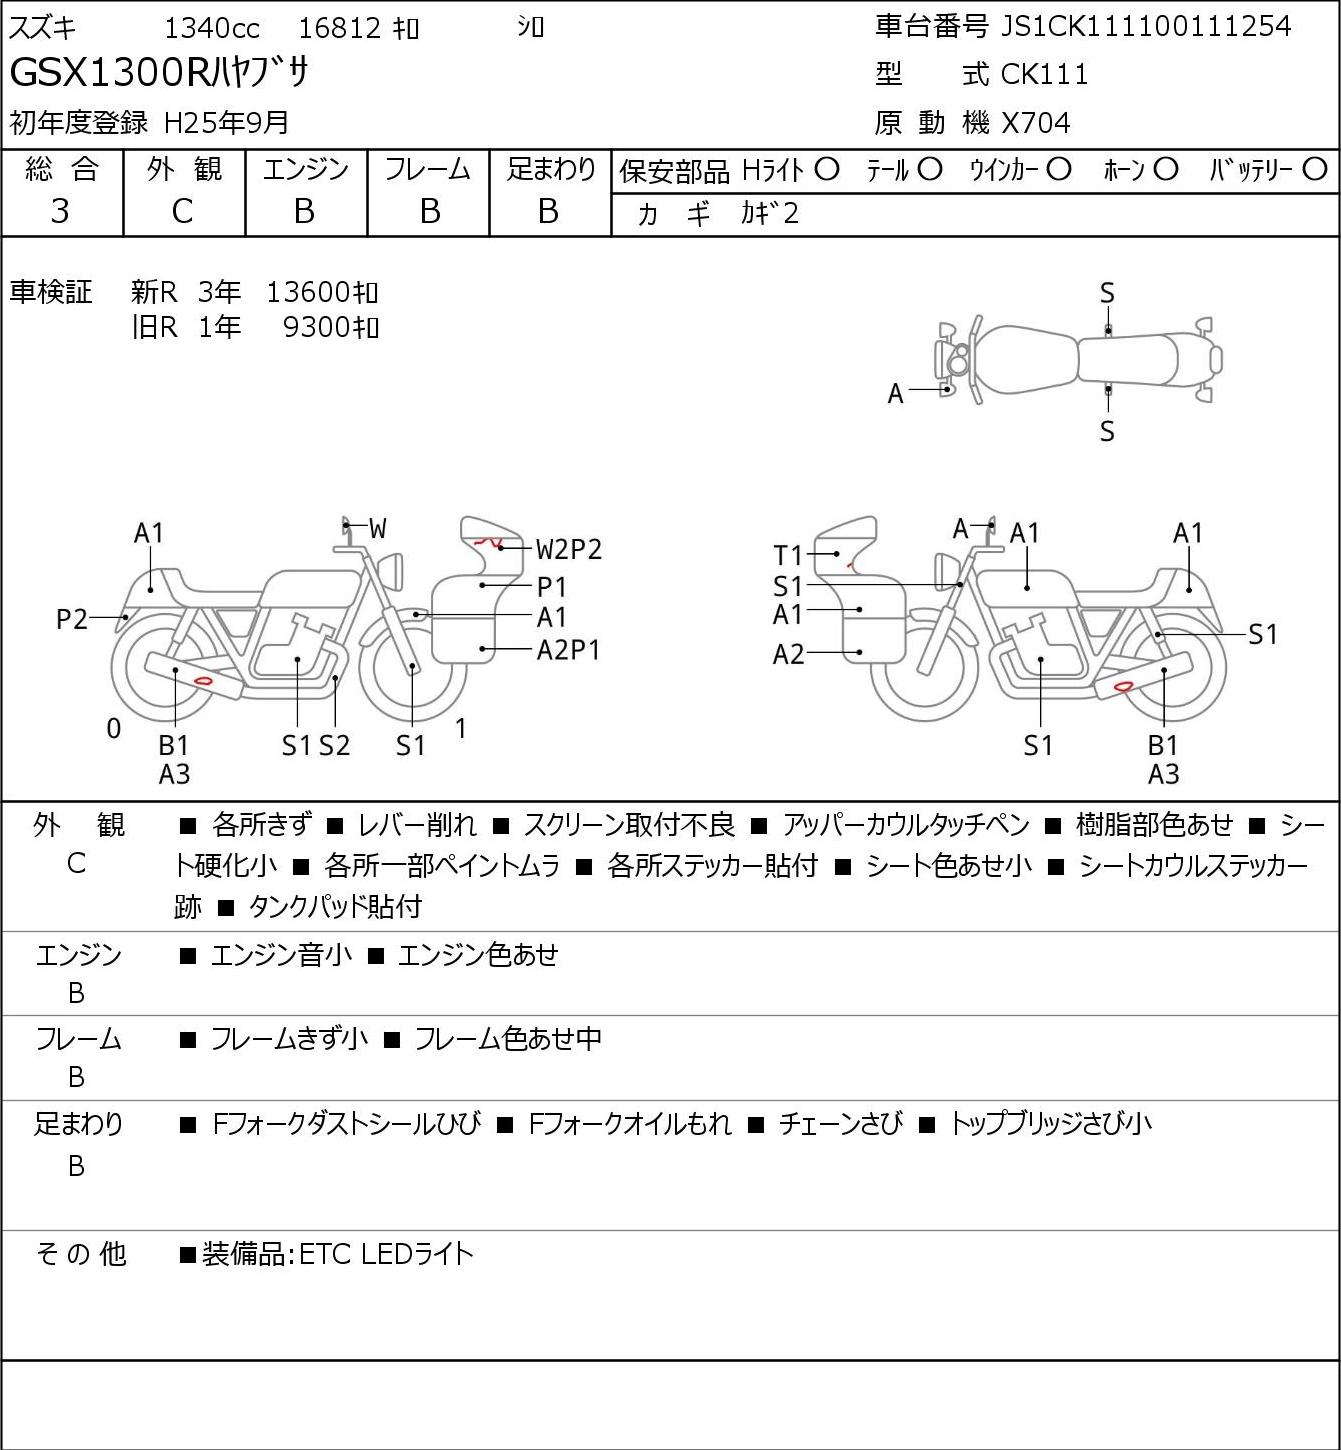 Suzuki GSX 1300 R HAYABUSA CK111 2013г. 16812